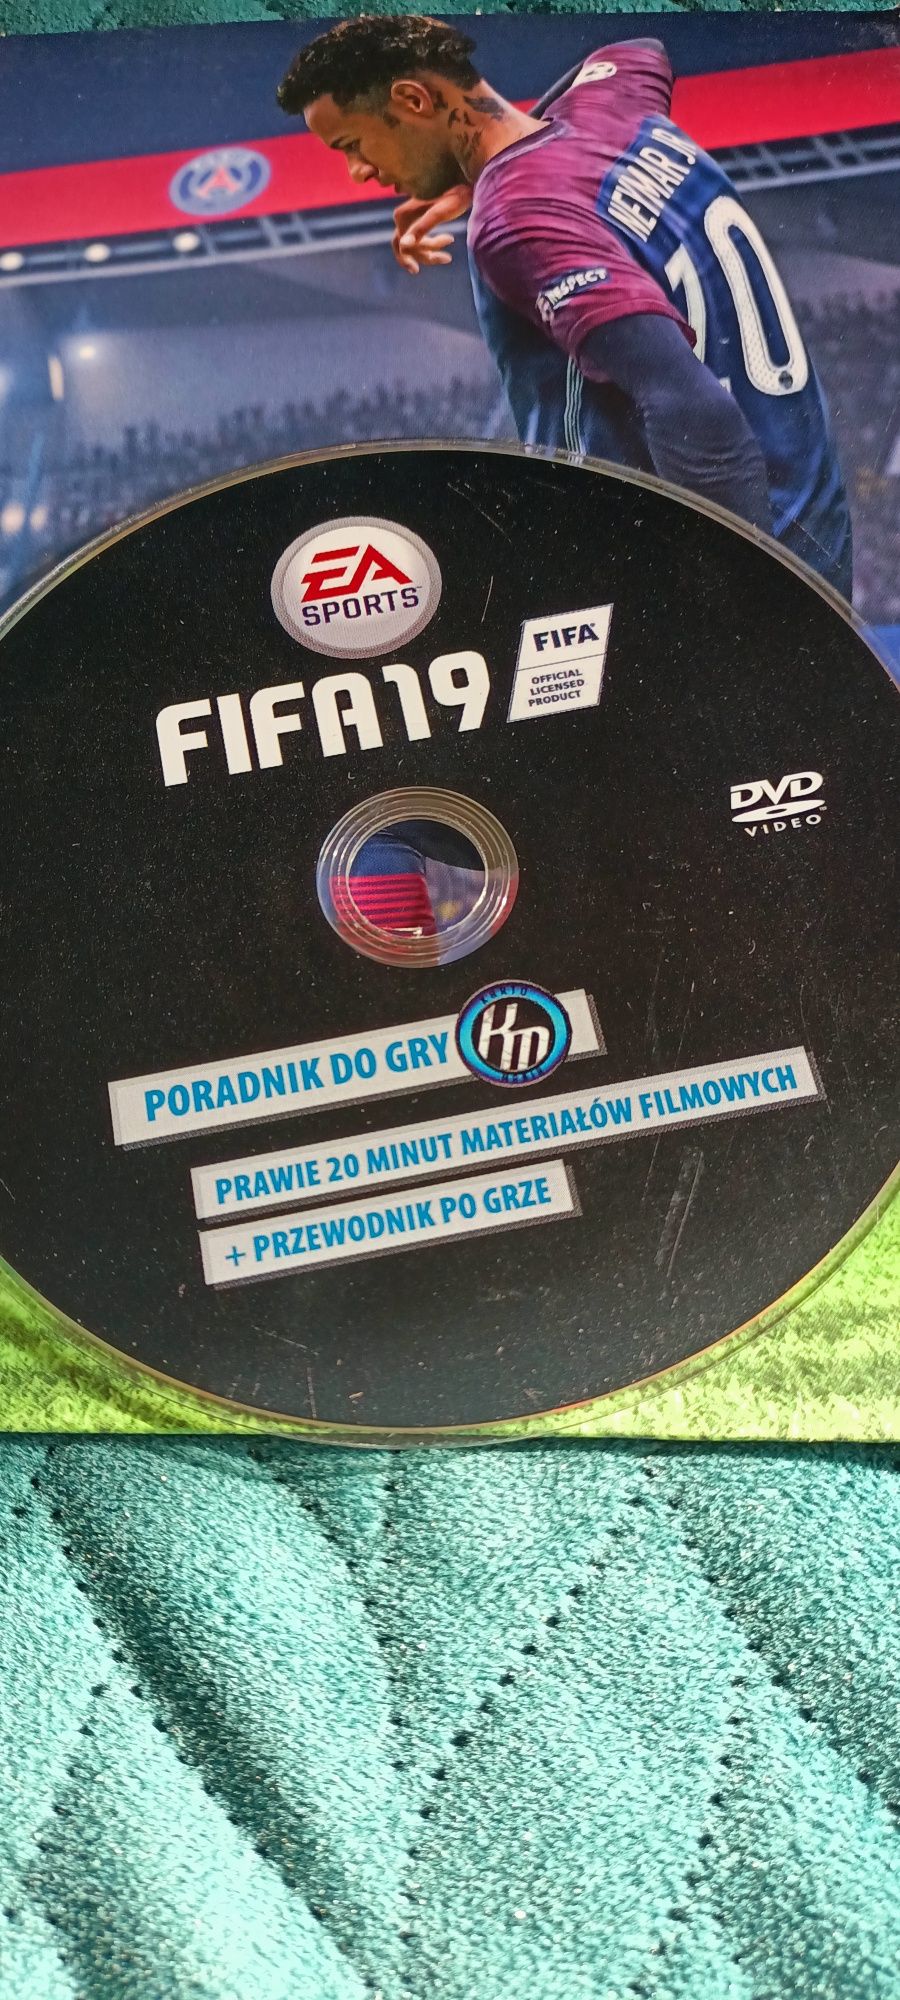 Poradnik do gry FIFA 19 DVD